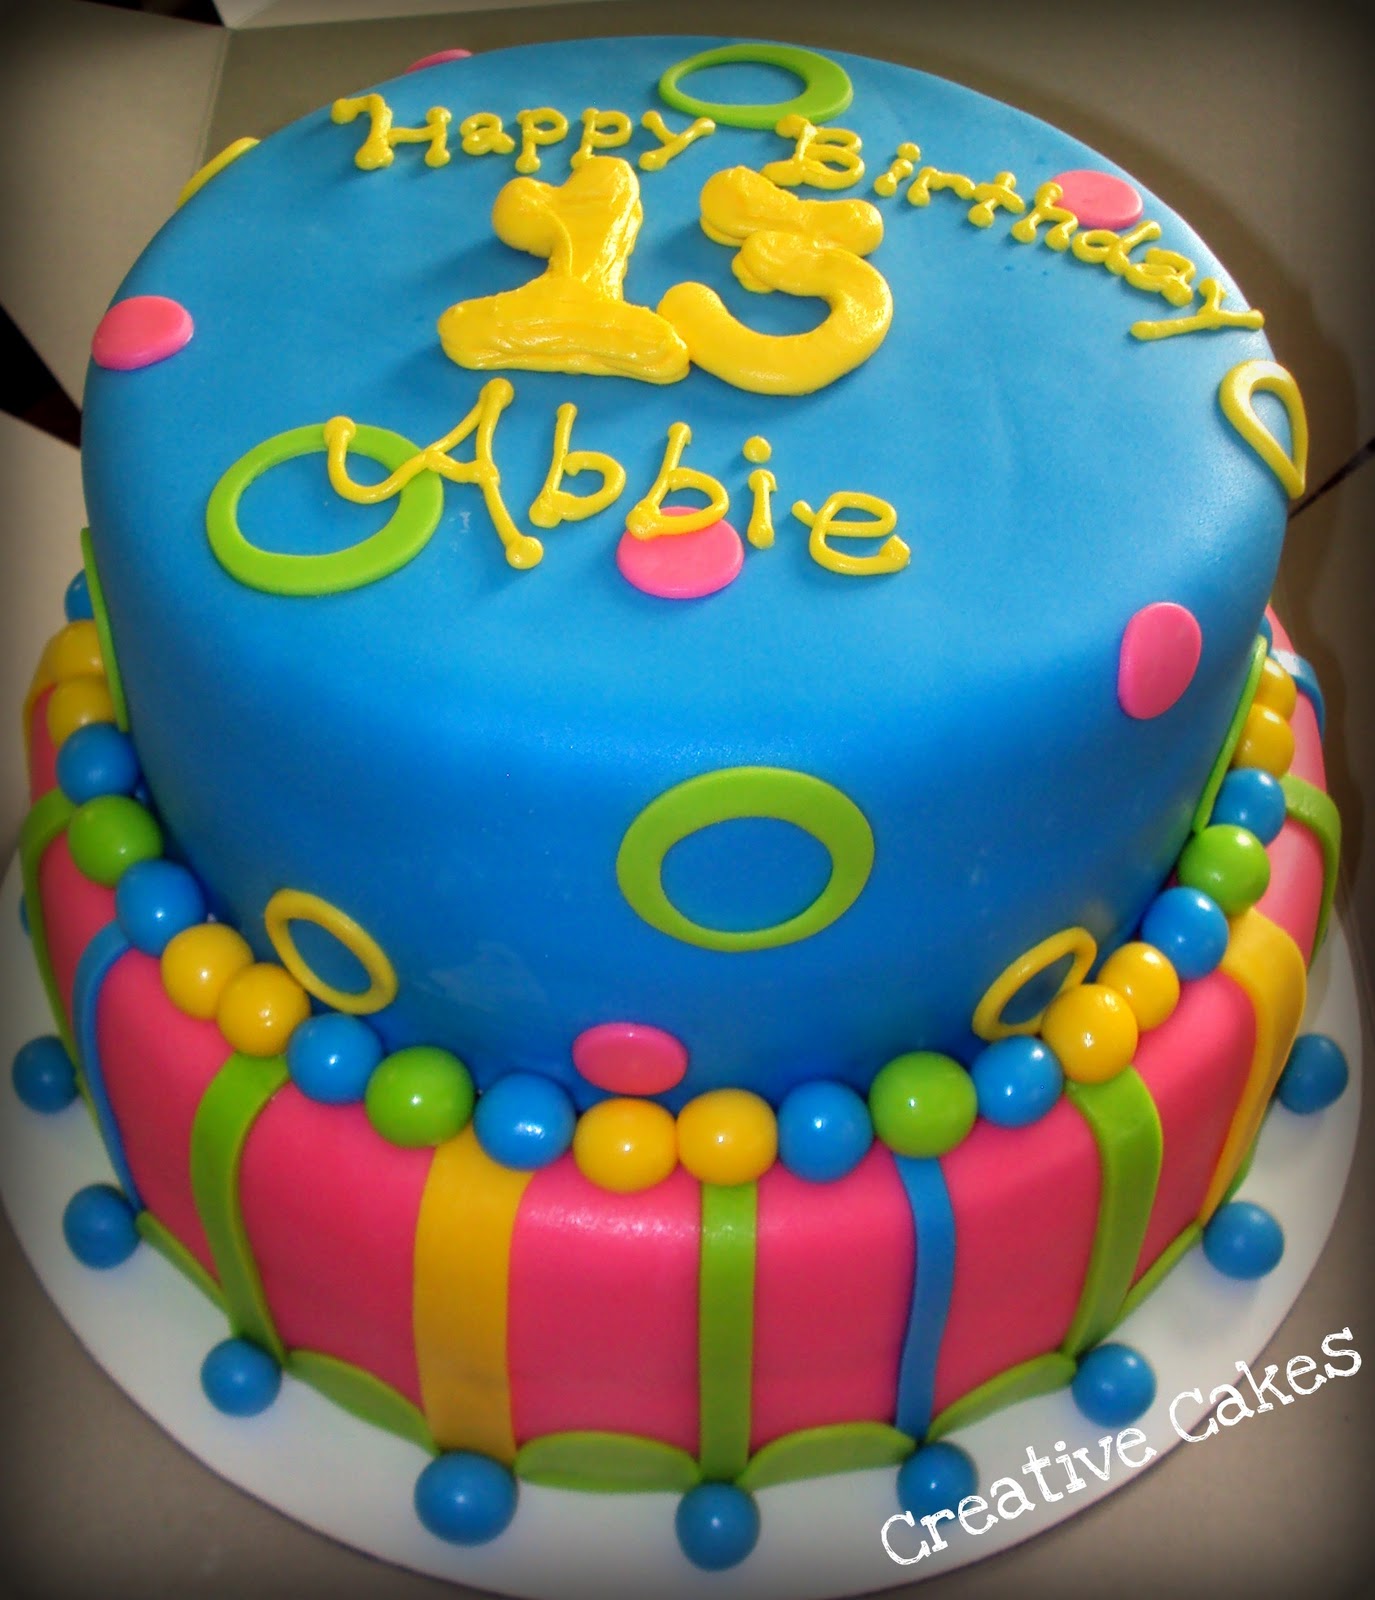 creative-cakes-13th-birthday-cake